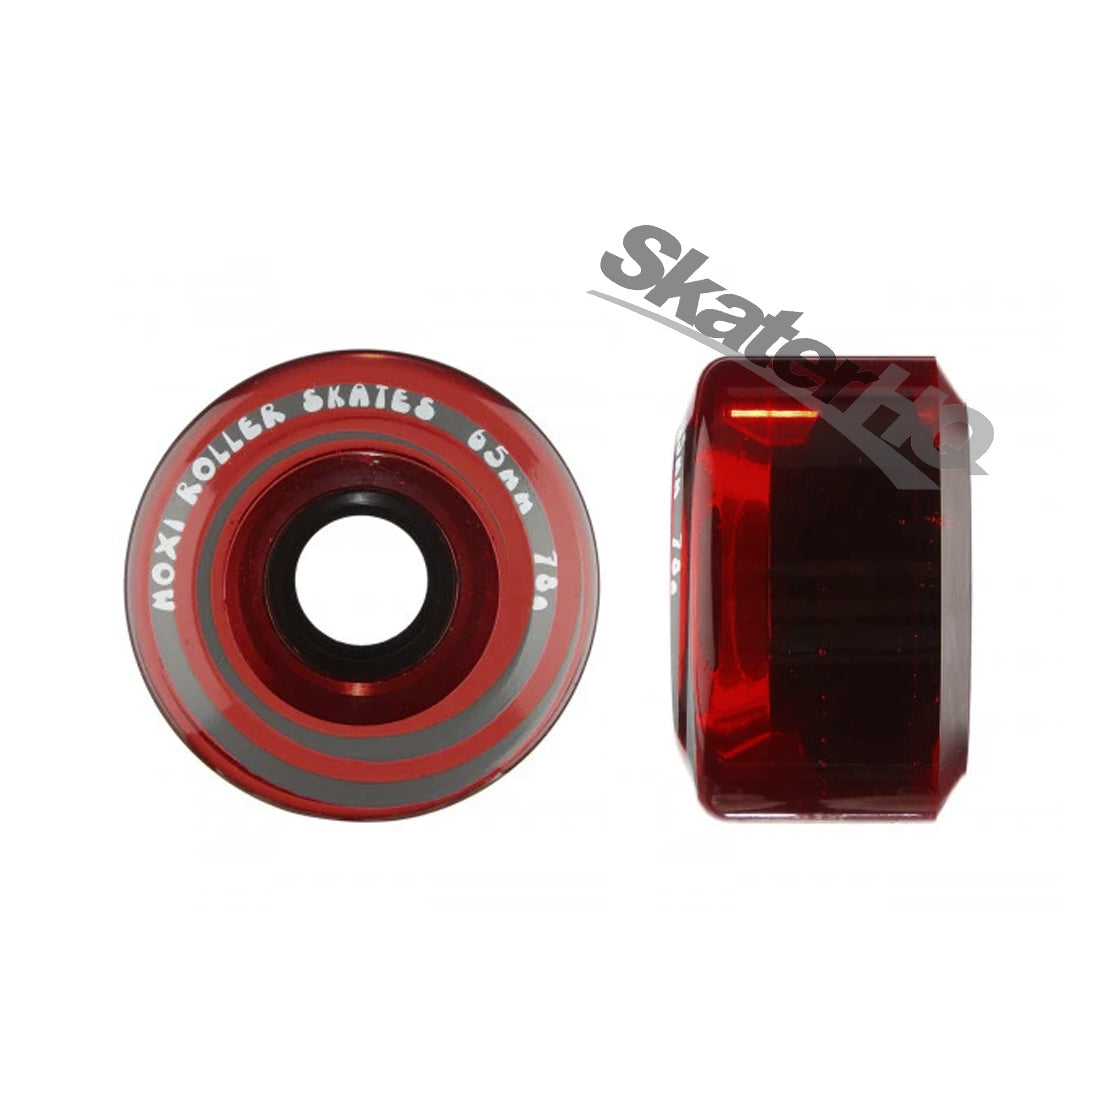 Moxi Gummy 65mm 78a 4pk - Cherry Stain Roller Skate Wheels